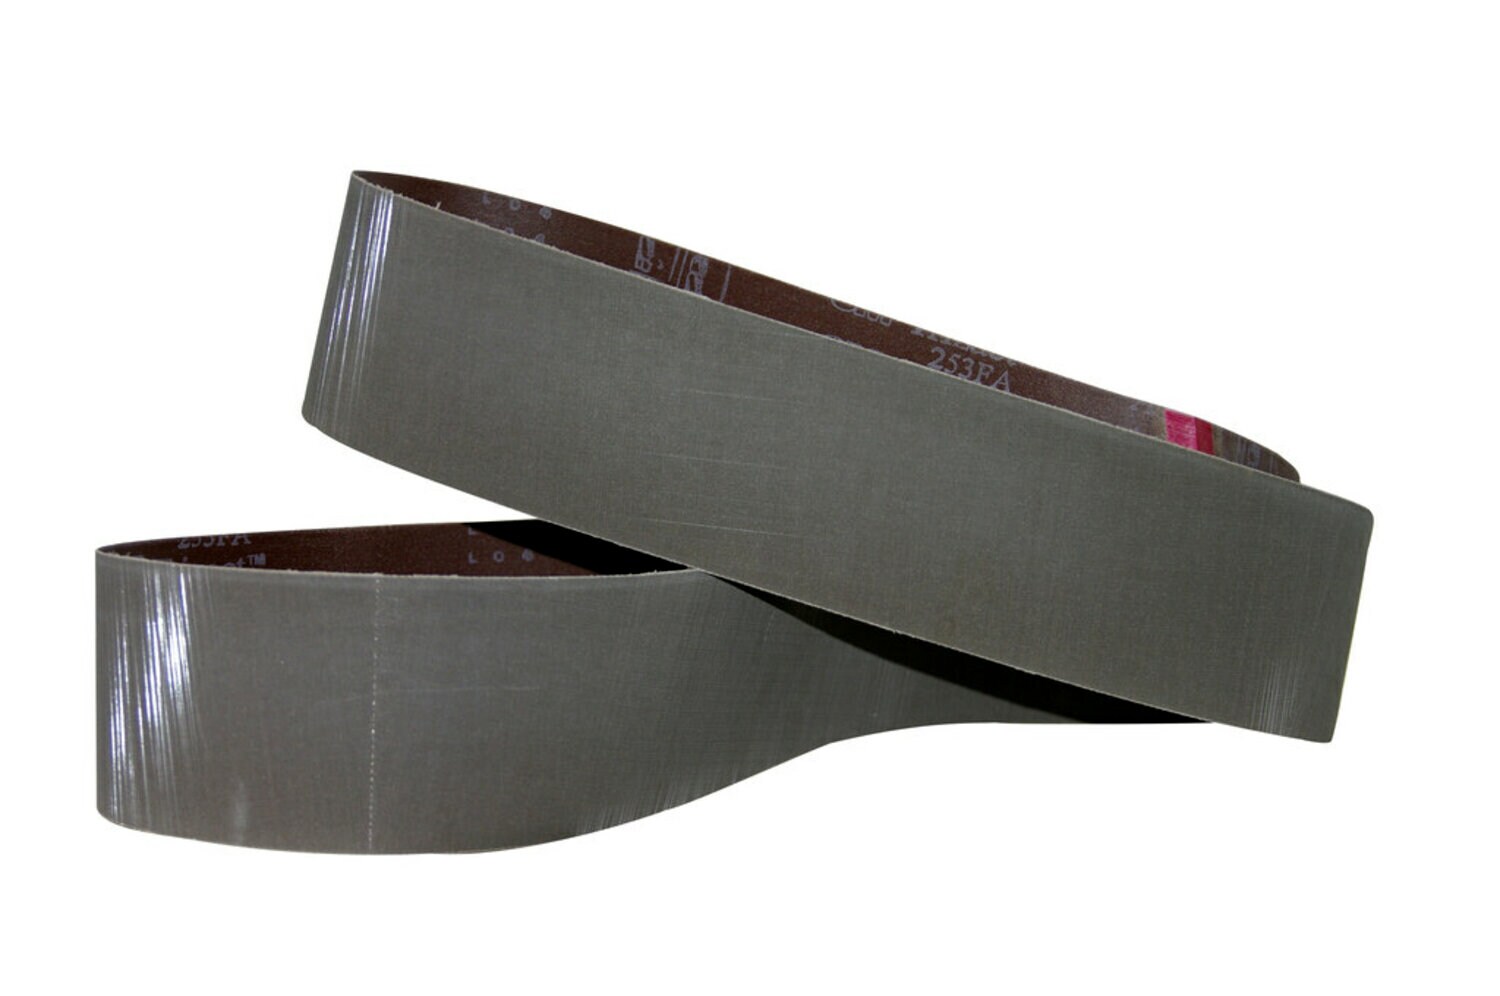 7010365010 - 3M Trizact Cloth Belt 253FA, A30 XF-weight, 4 in x 54 in, Film-lok,
Full-flex, 50 ea/Case